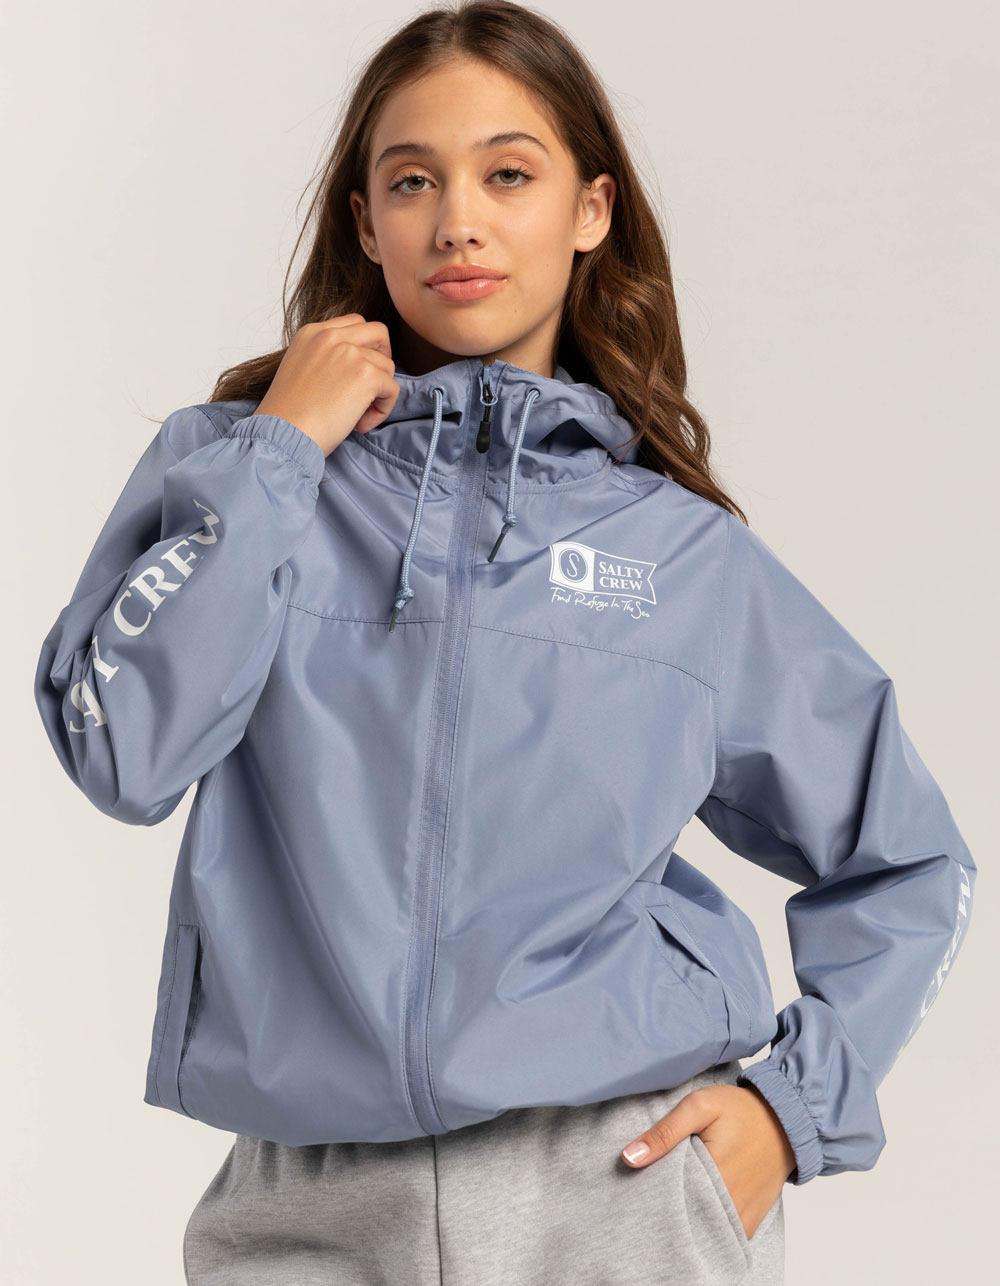 NWT Women’s Fishing Overcast Windbreaker Jacket